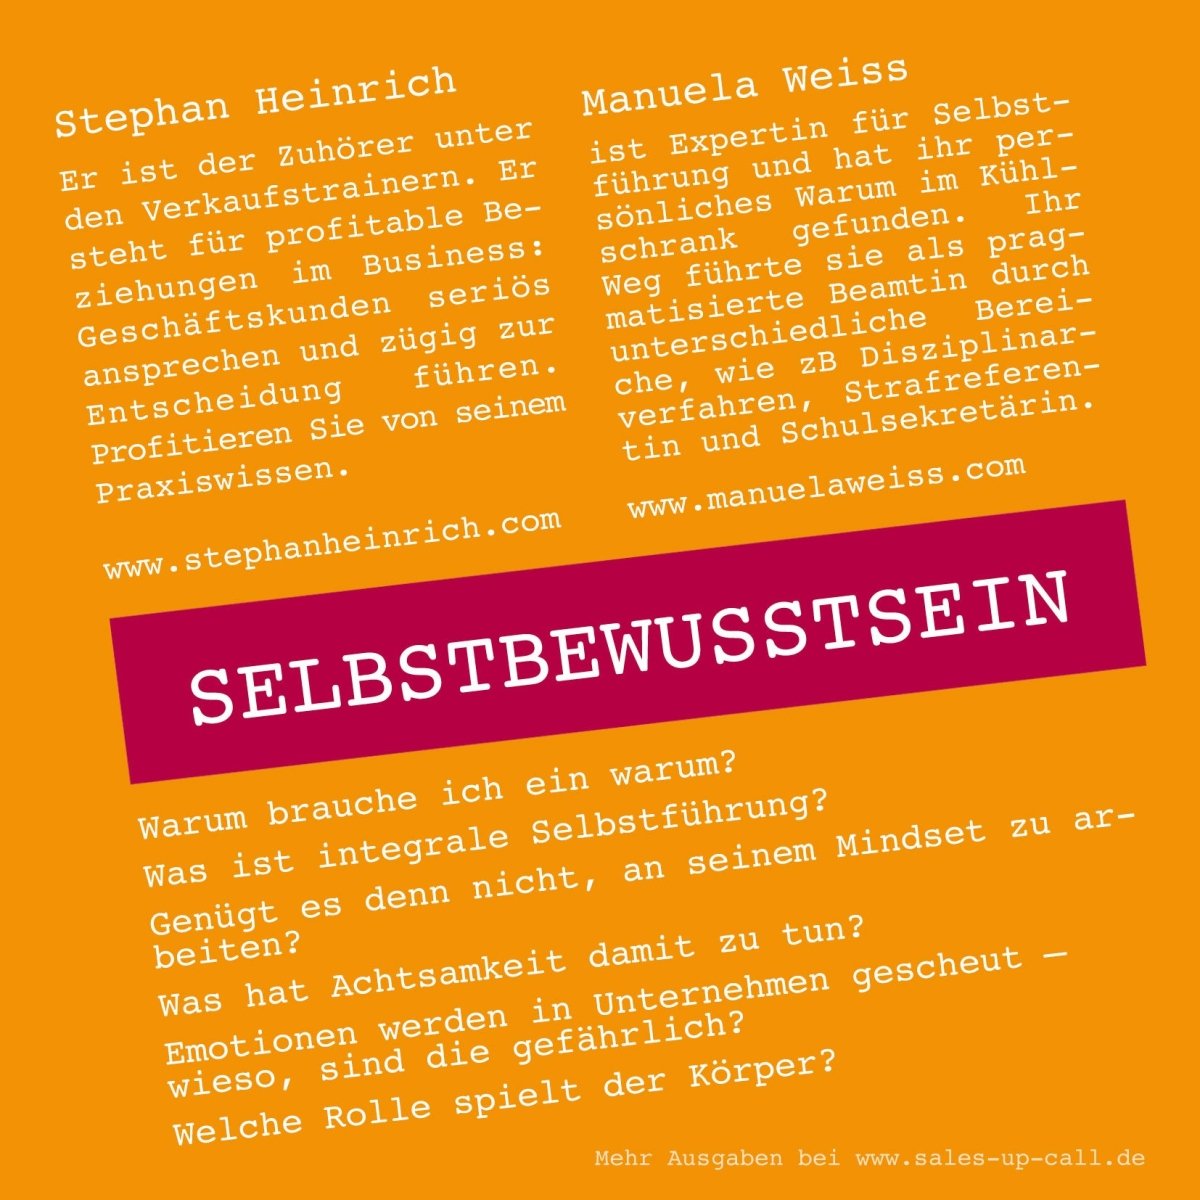 Selbstbewusstsein - Sales-up-Call - Stephan Heinrich